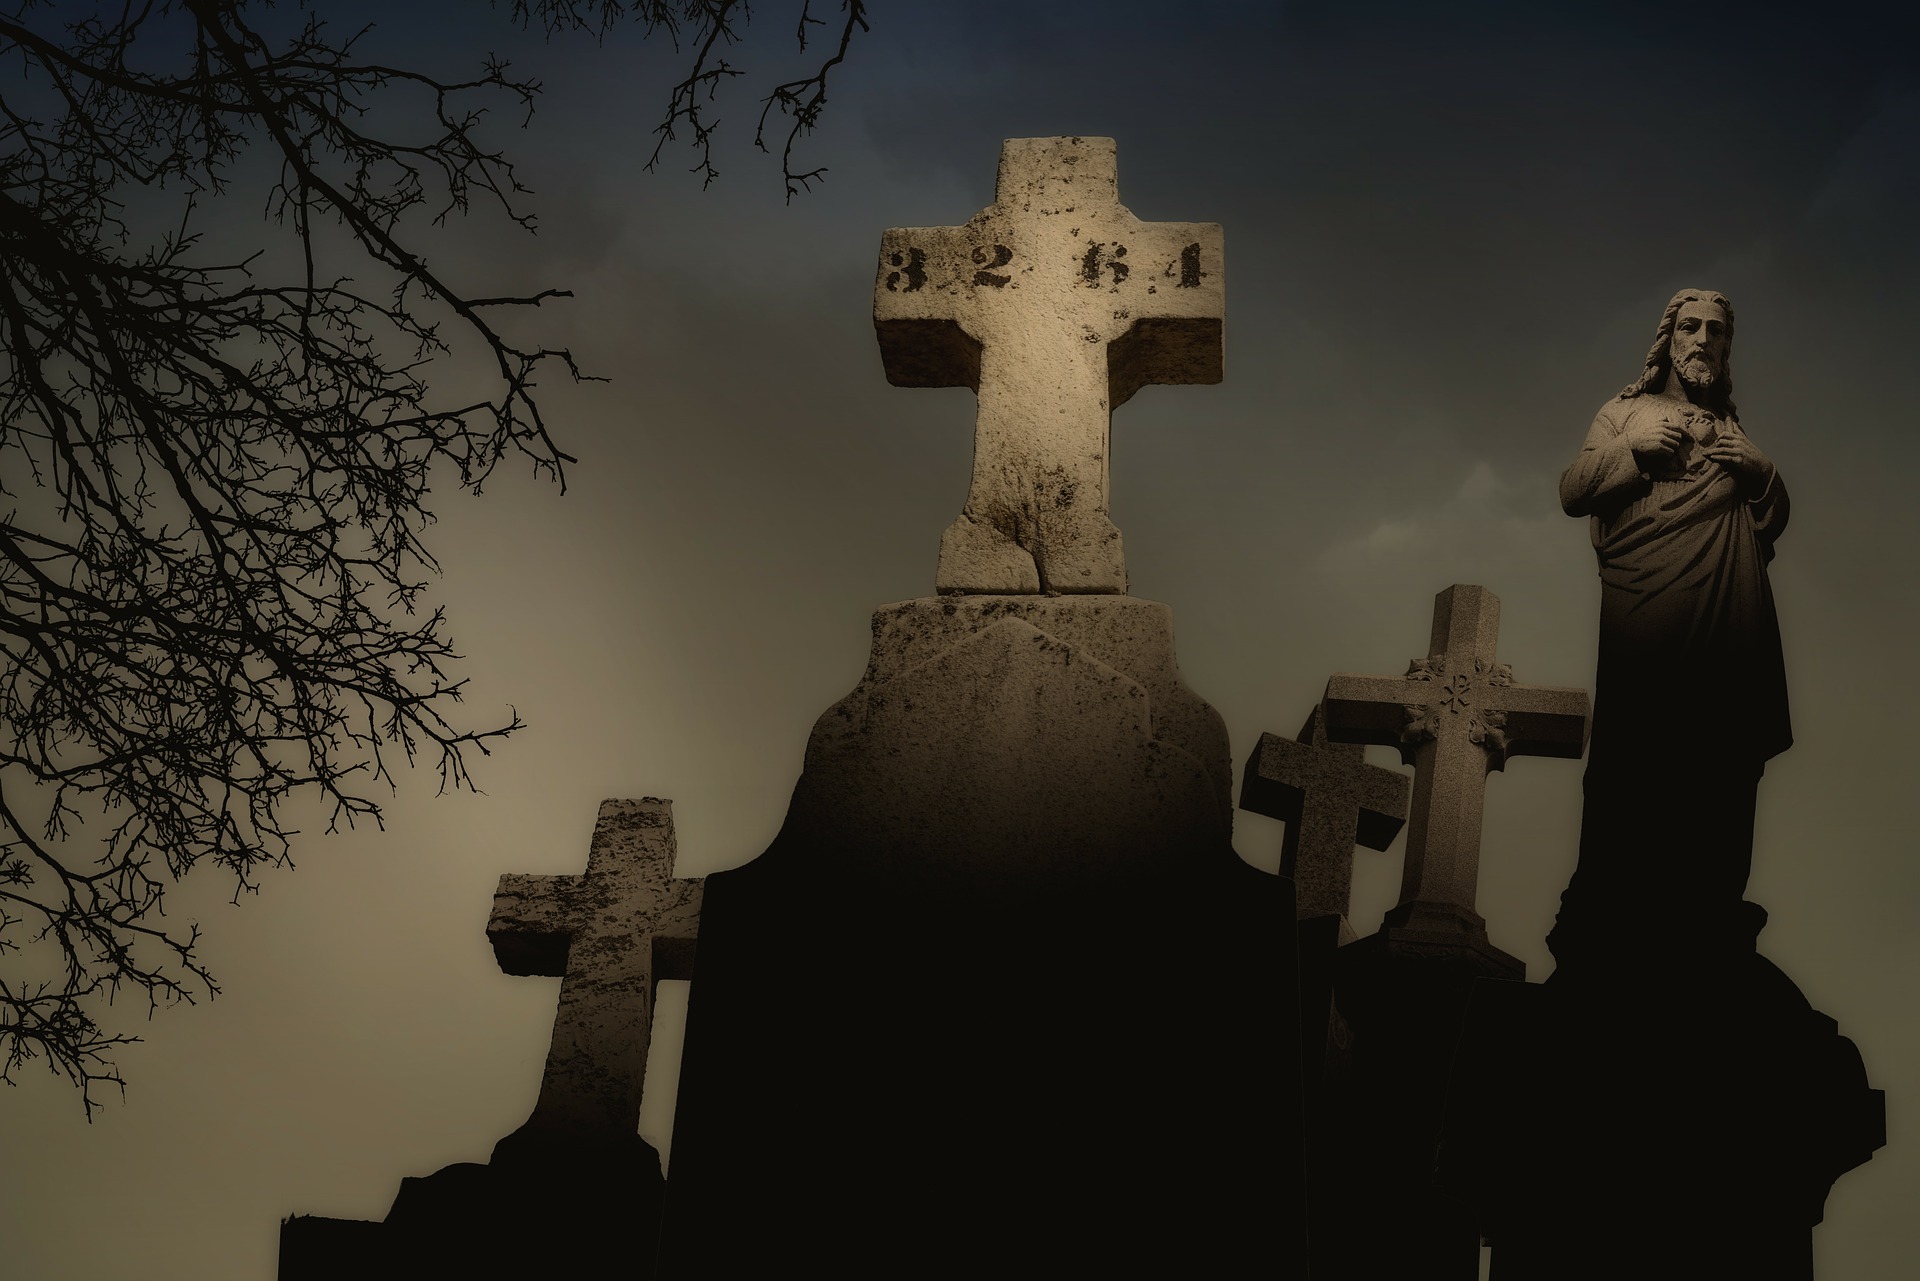 Cemetery with stone crosses